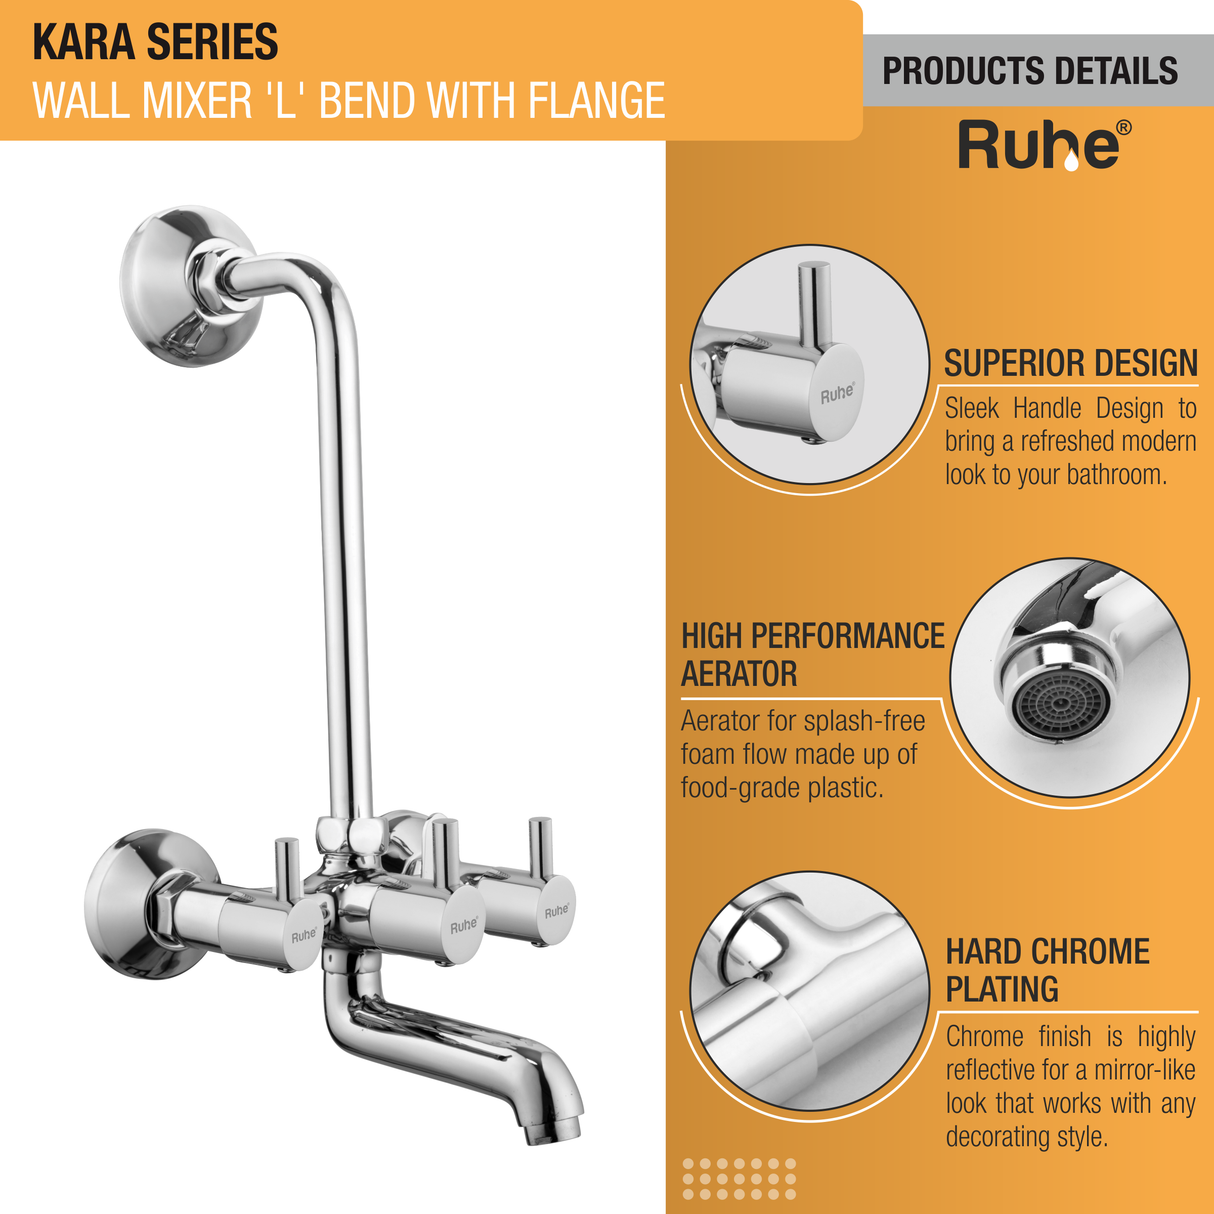 Kara Wall Mixer with L Bend Faucet details